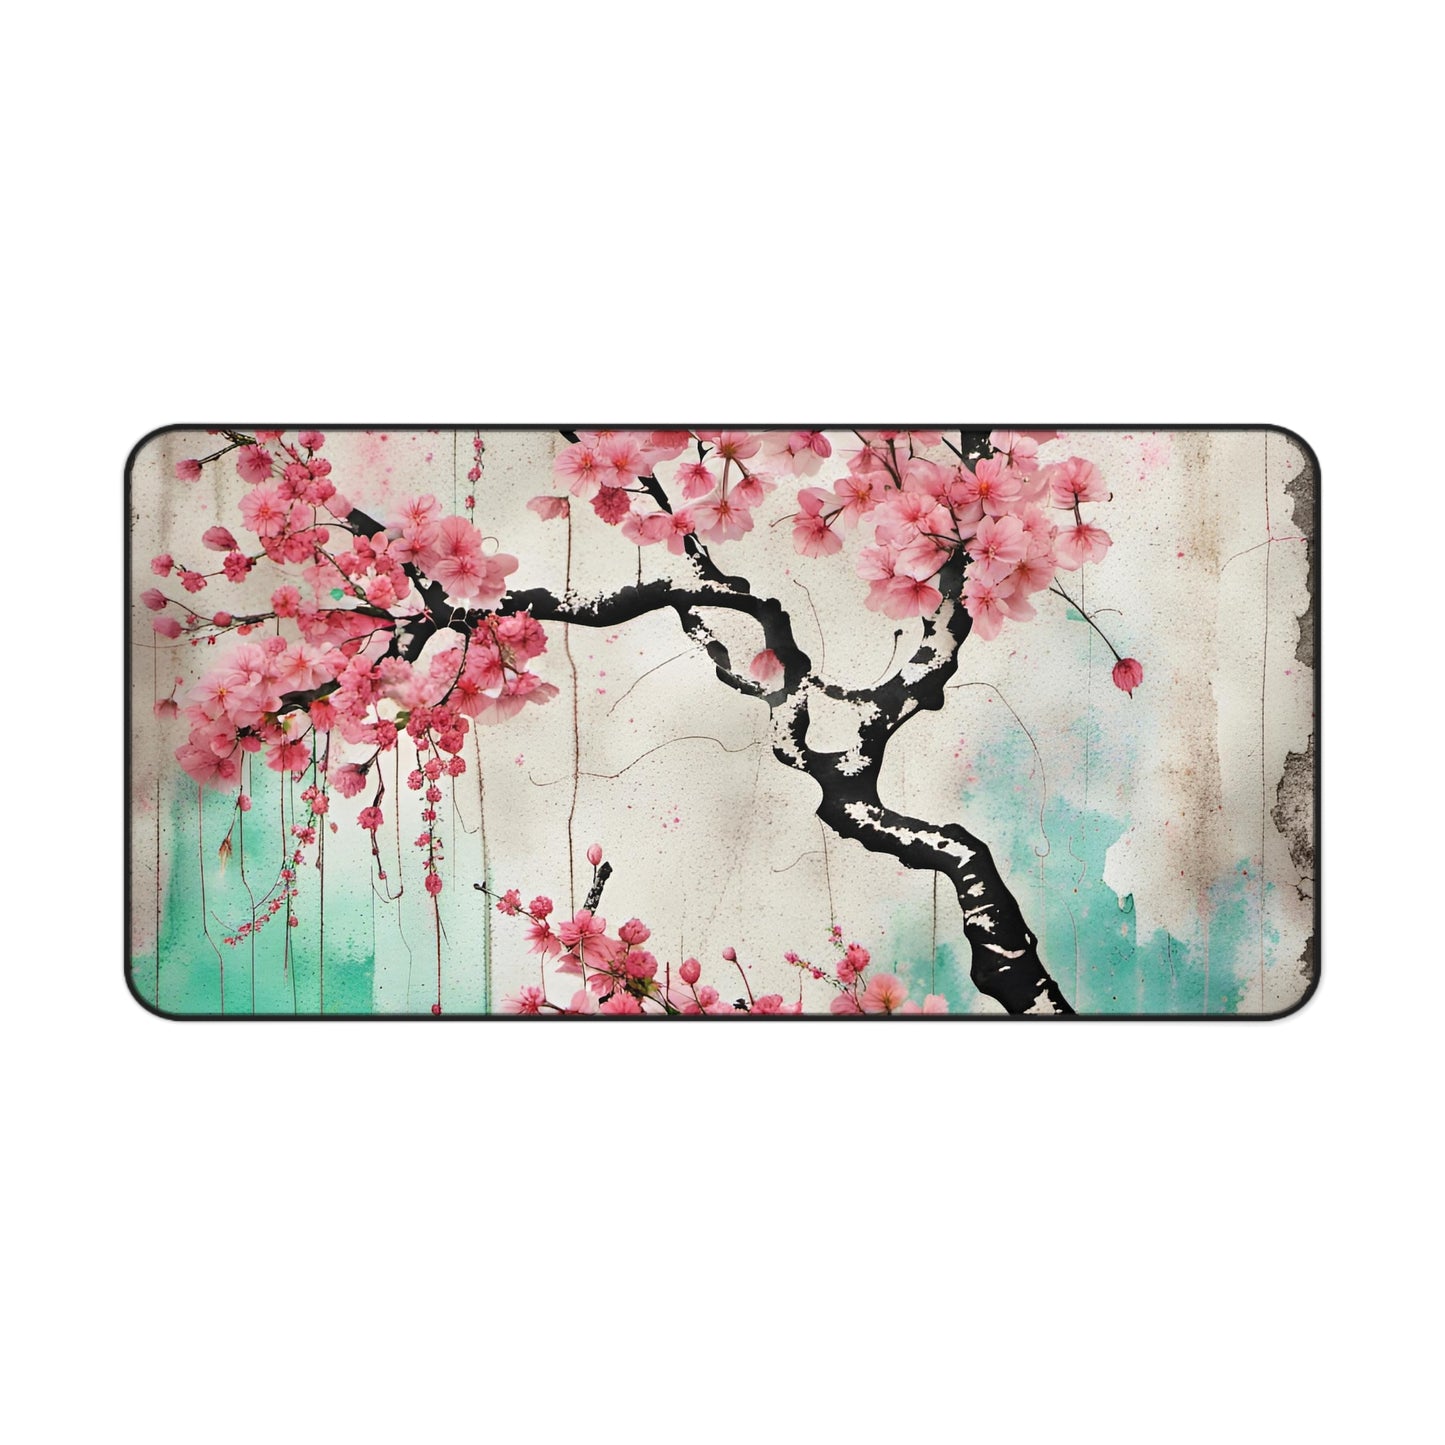 Cherry Blossoms Street Art Style Printed on Desk Mat 15x31